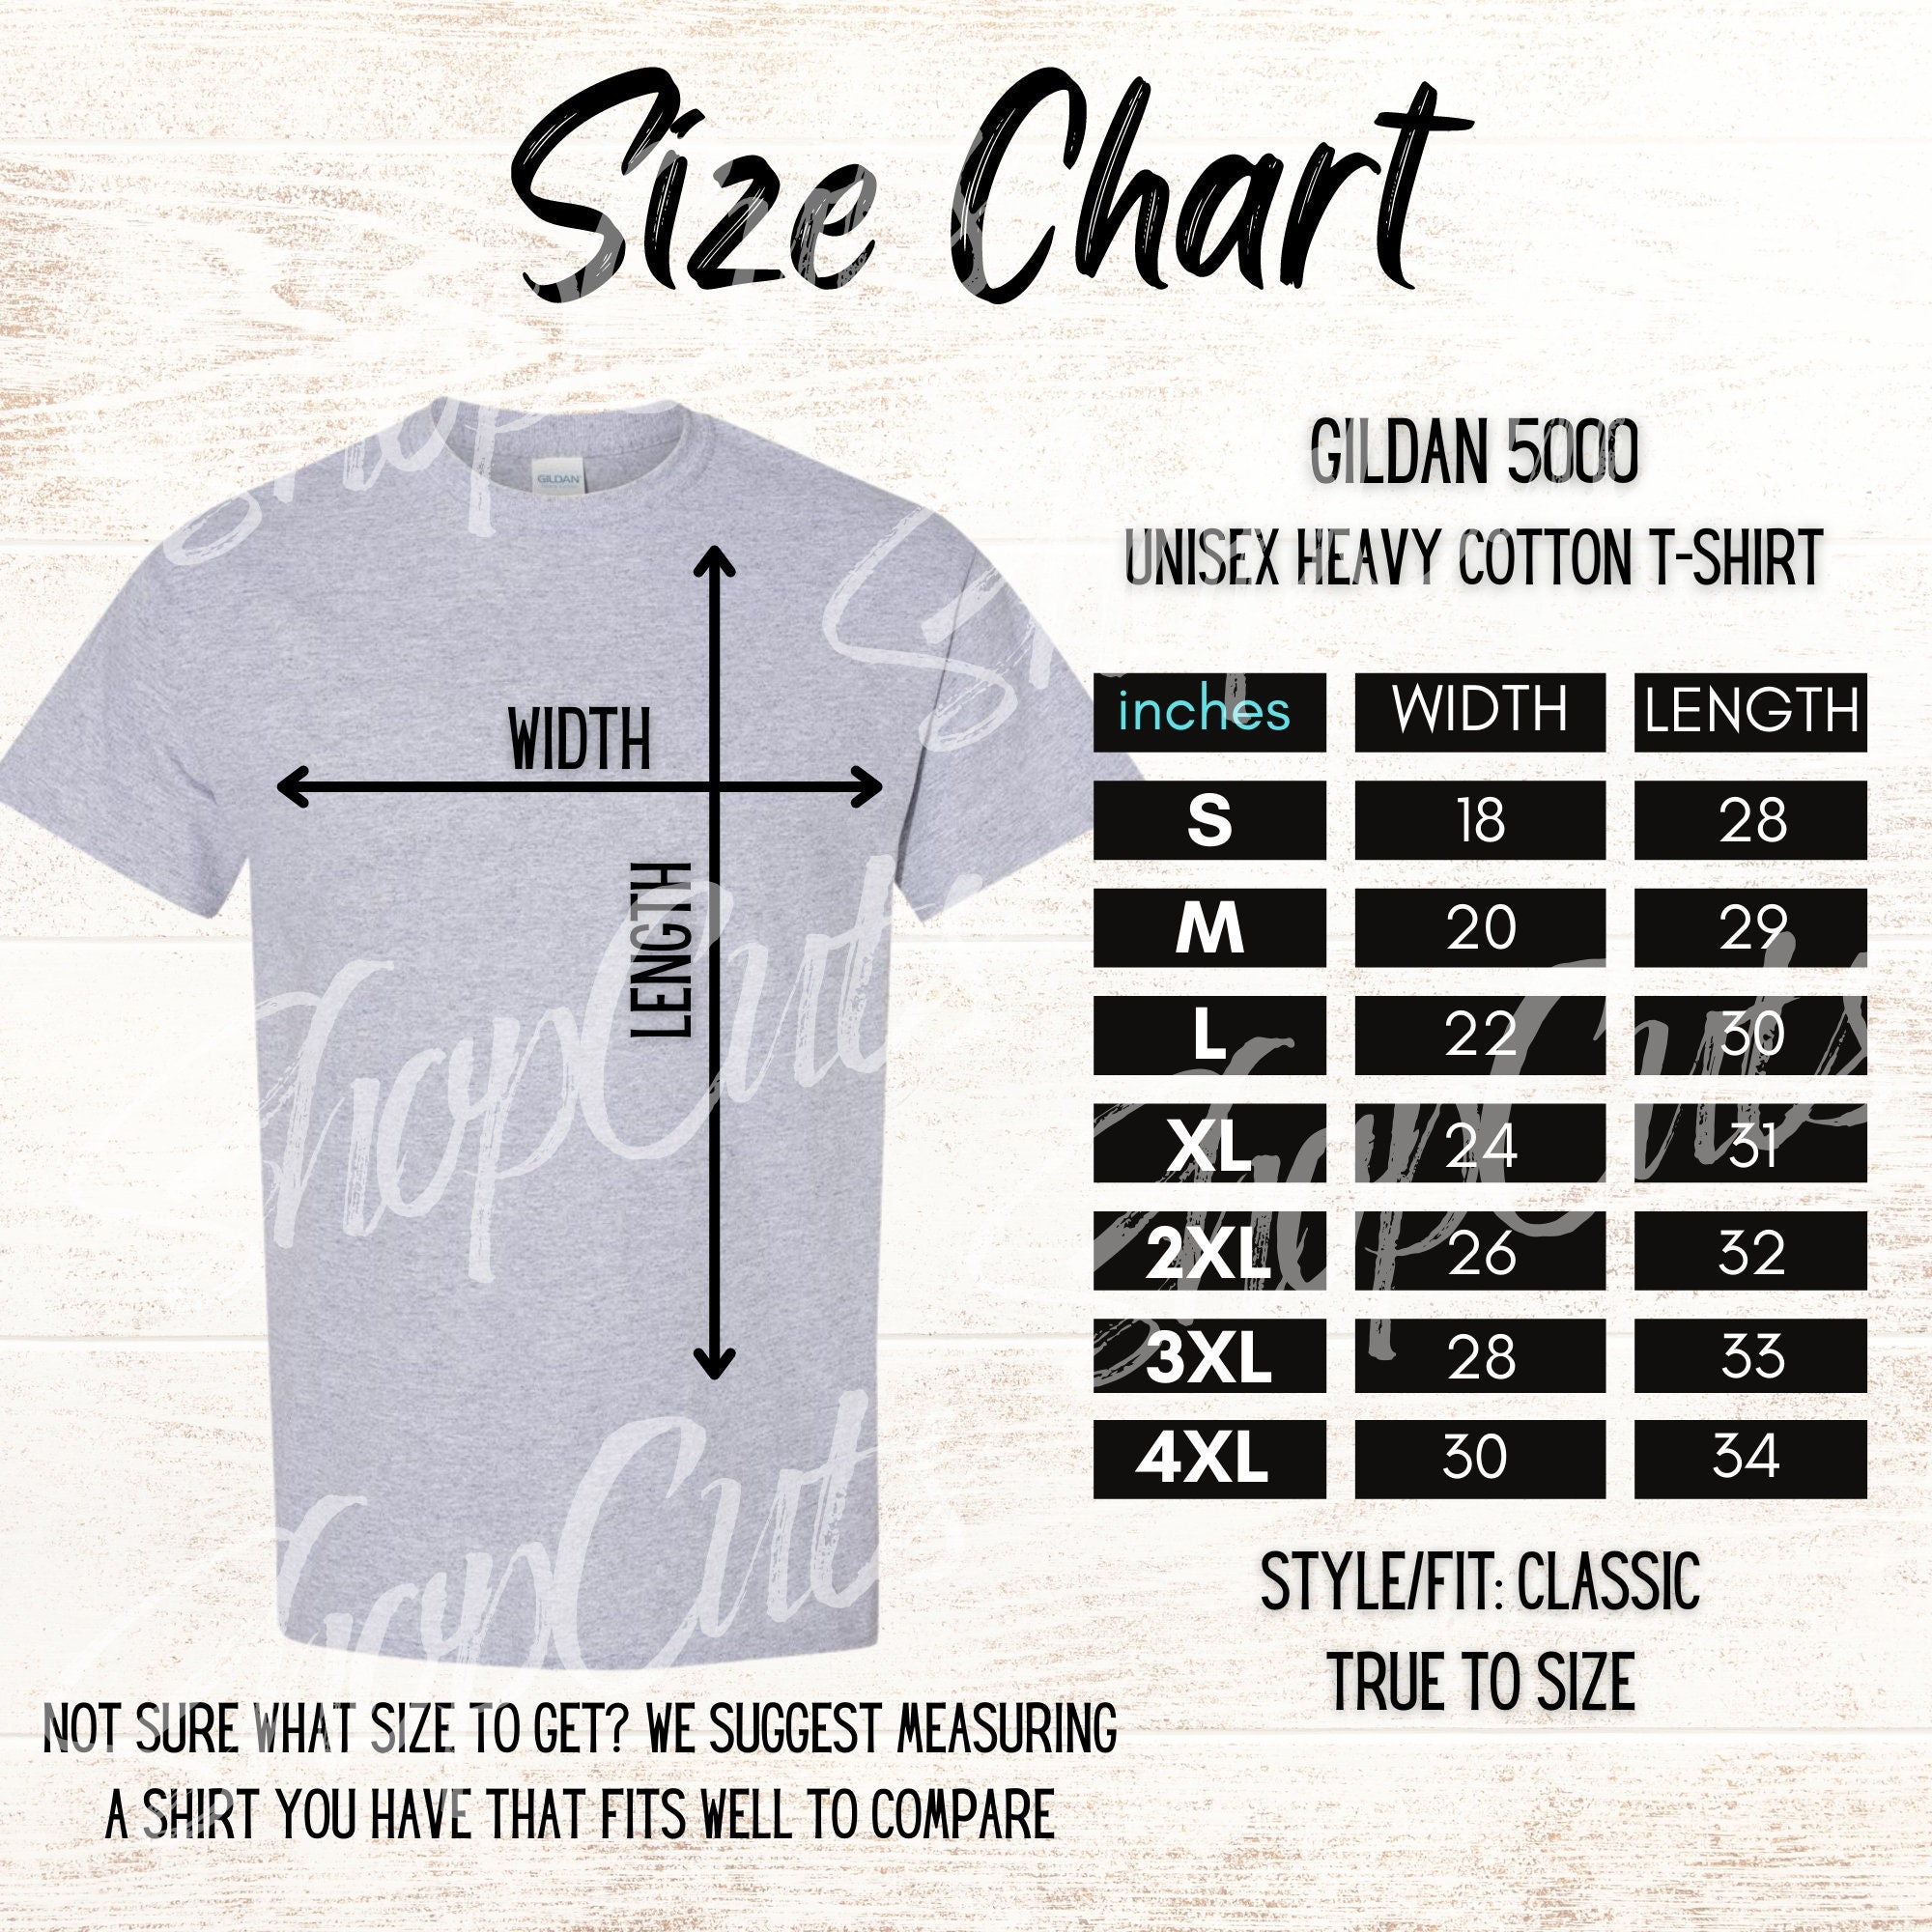 GILDAN 5000 Size Chart Guide T-Shirt Size Chart G5000 | canoeracing.org.uk